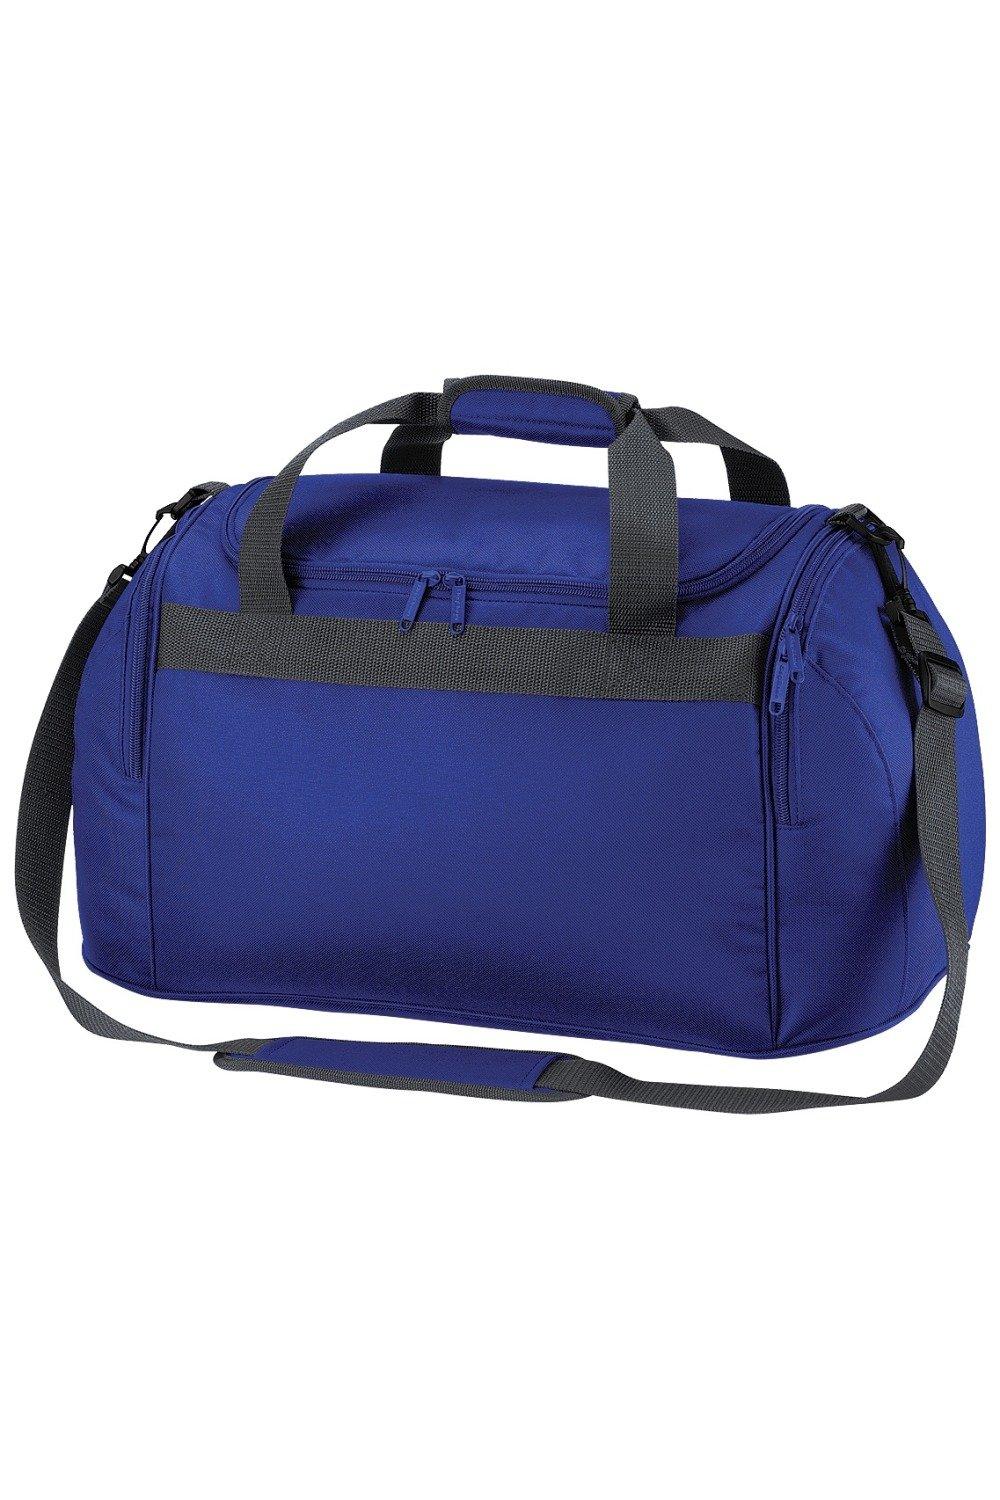 Дорожная сумка для фристайла/спортивная сумка (26 литров) (2 шт. в упаковке) Bagbase, синий цена и фото